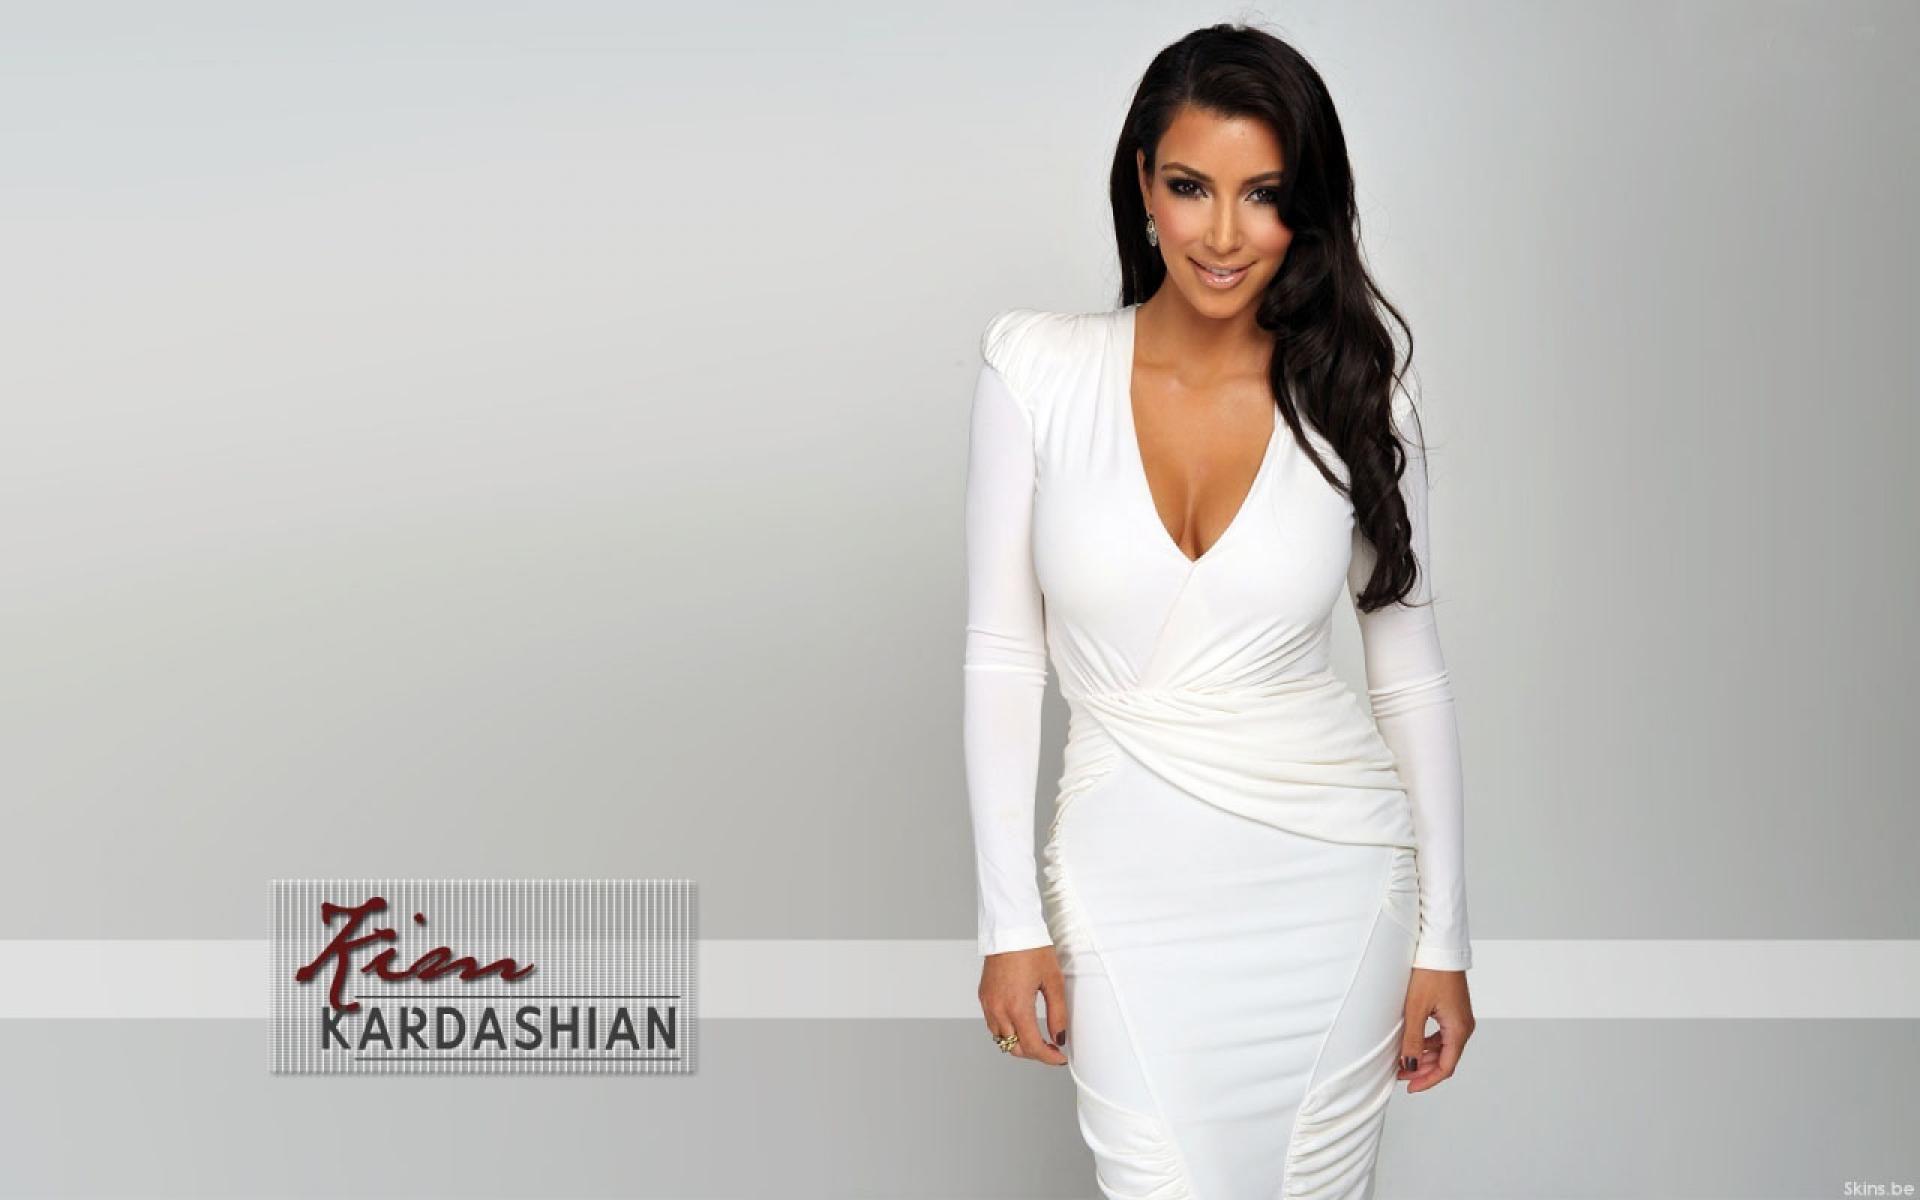 Kim Kardashian Closeup wallpaper. Kim Kardashian Closeup stock